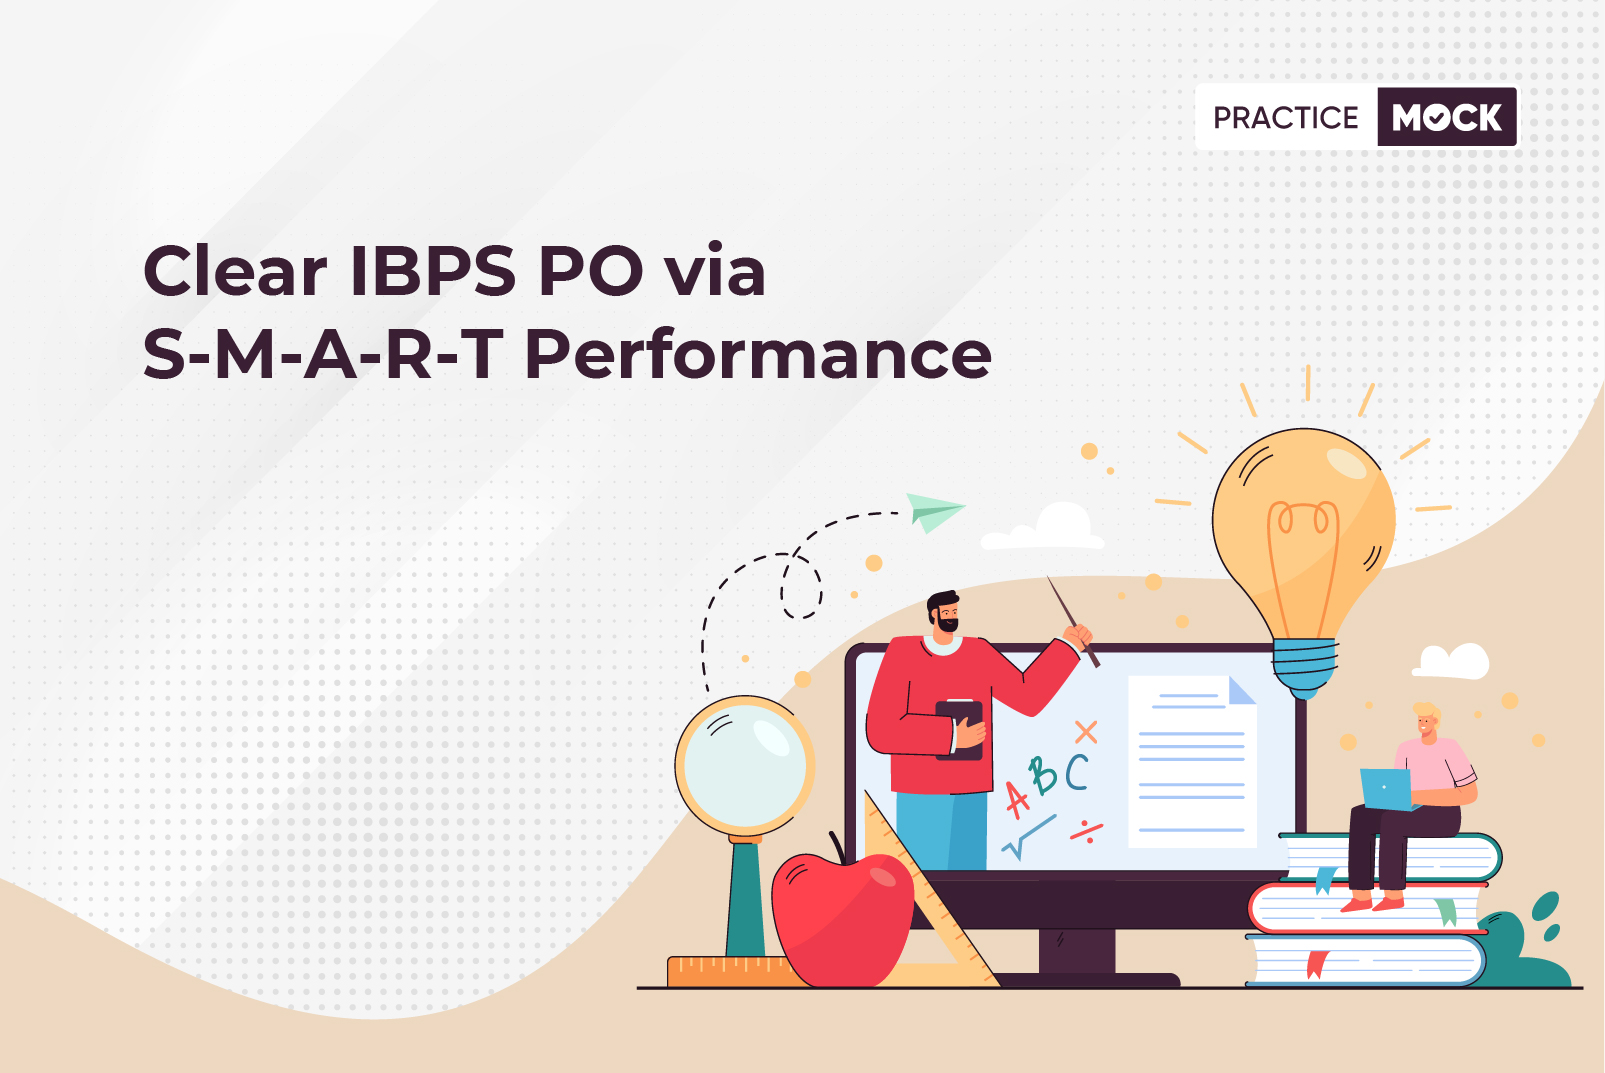 Clear IBPS PO via S-M-A-R-T Performance